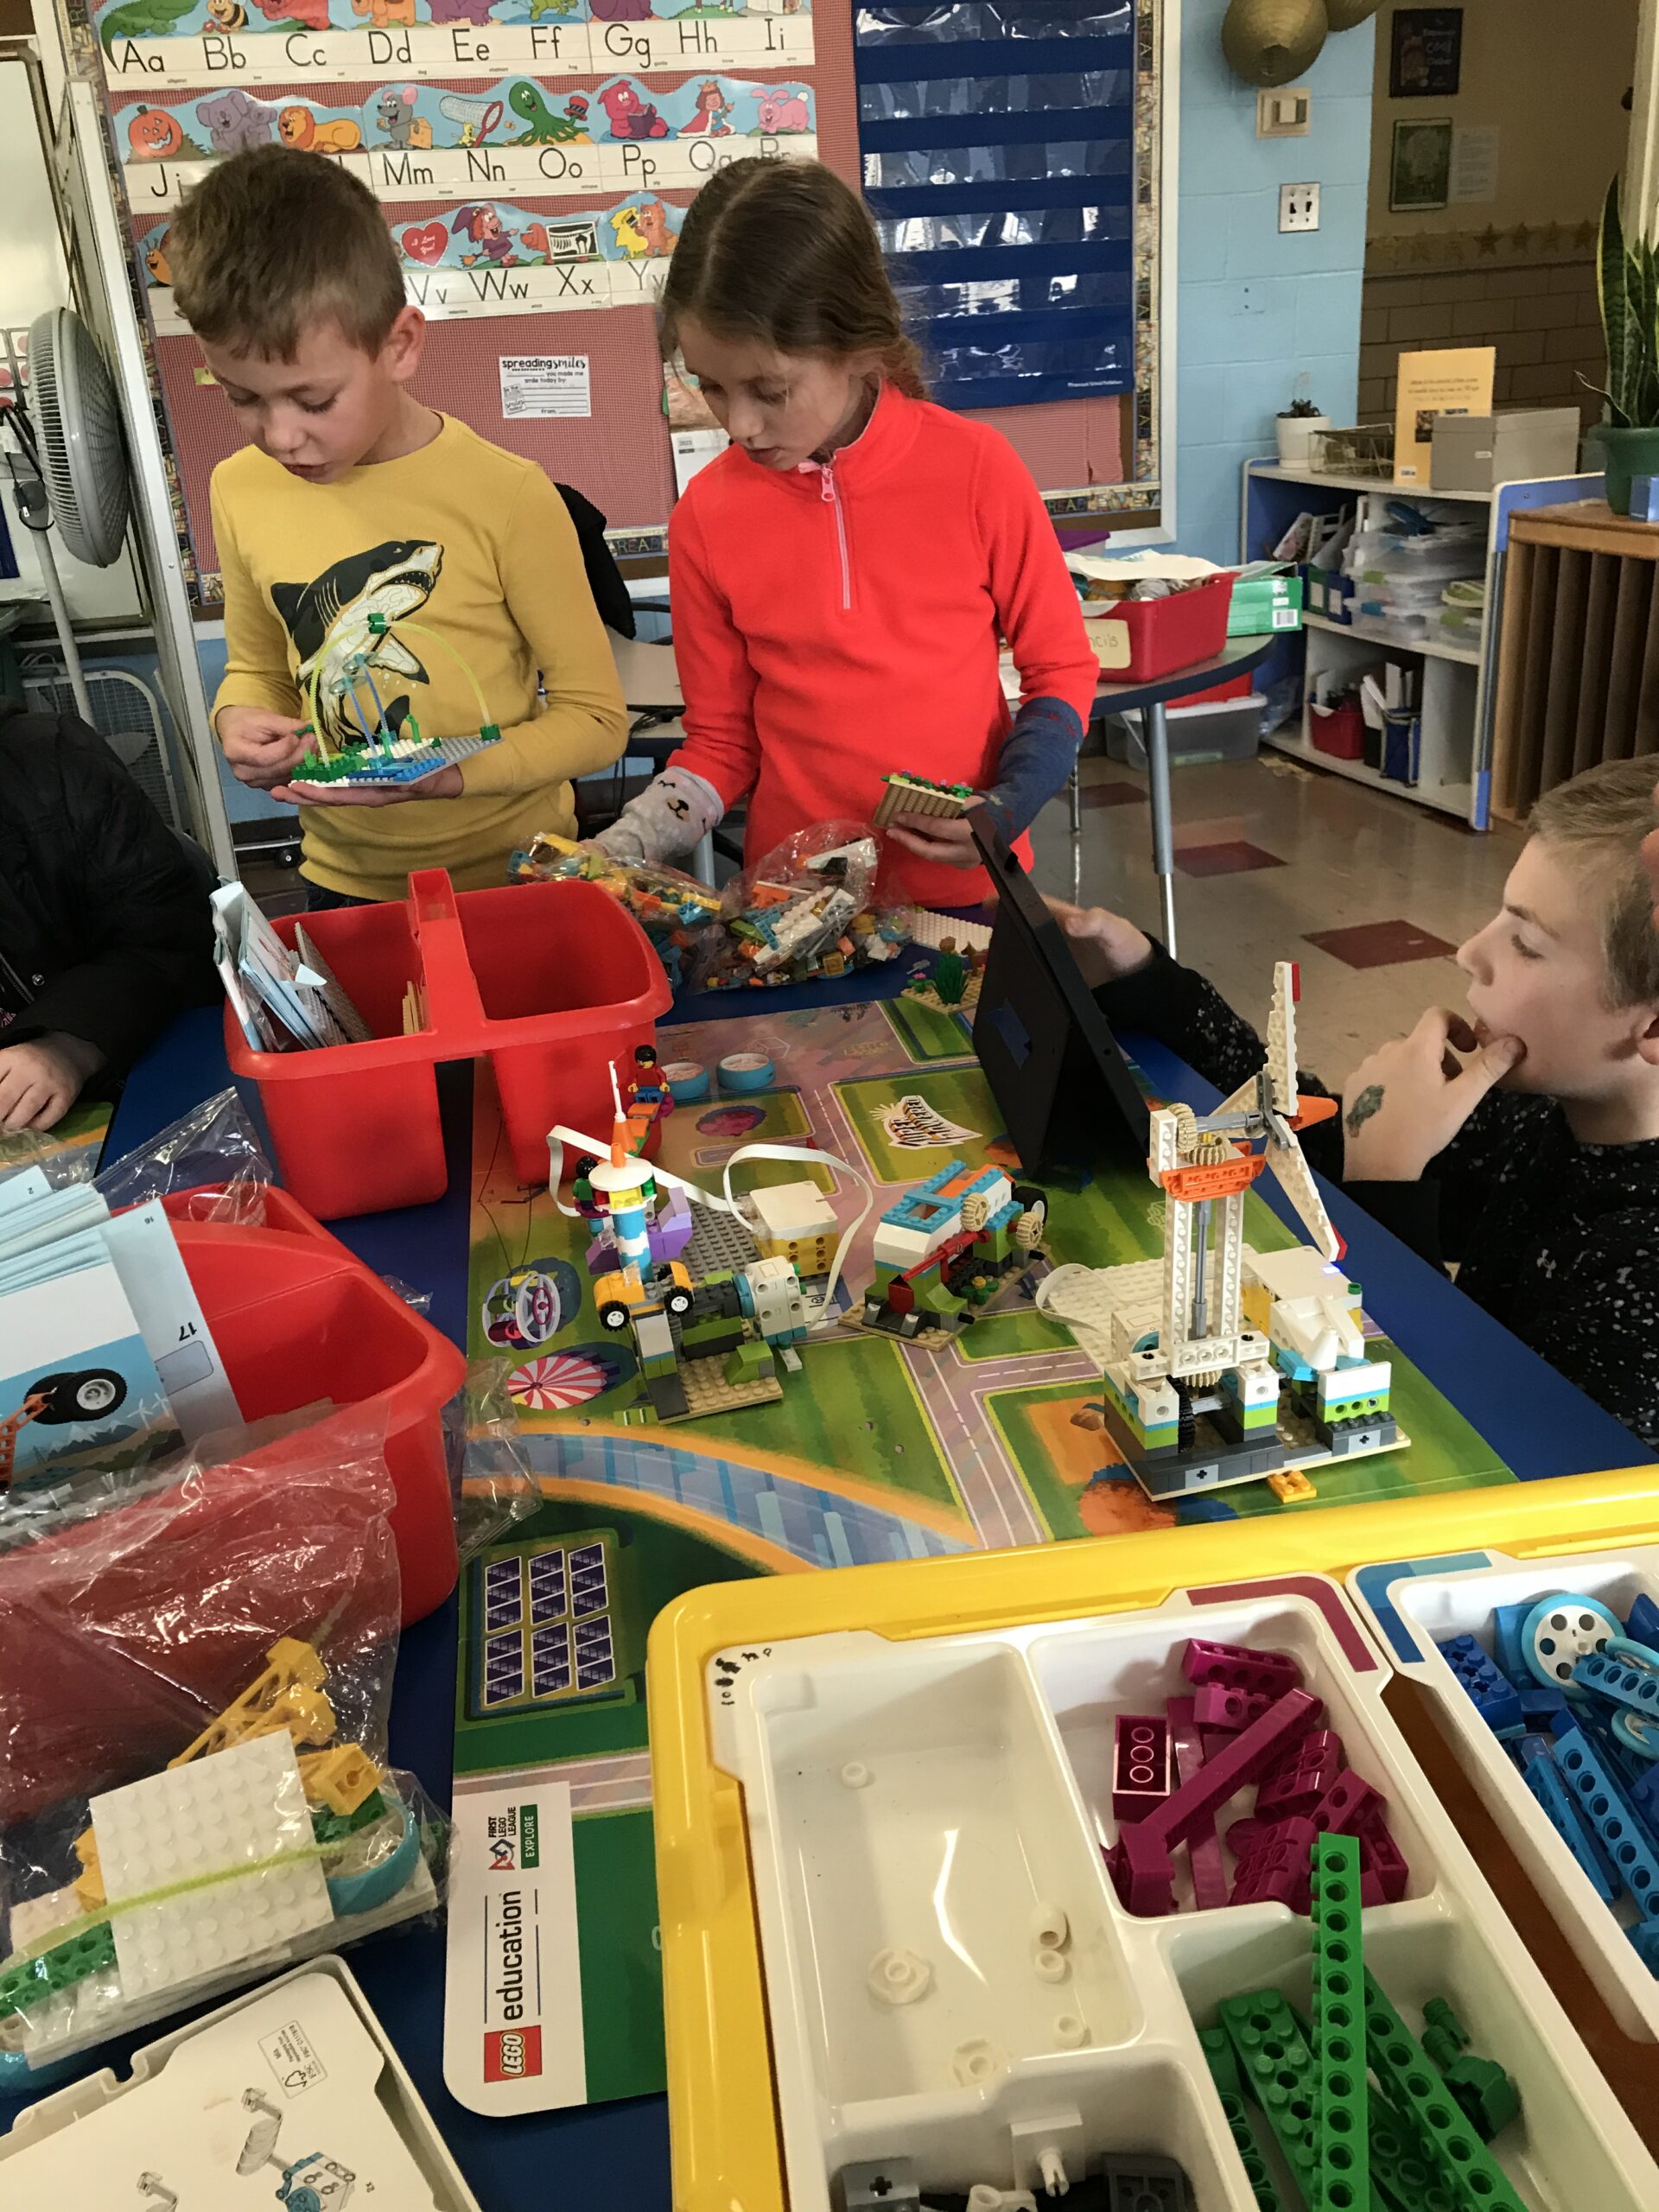 Shade Gap Elementary School Lego League students